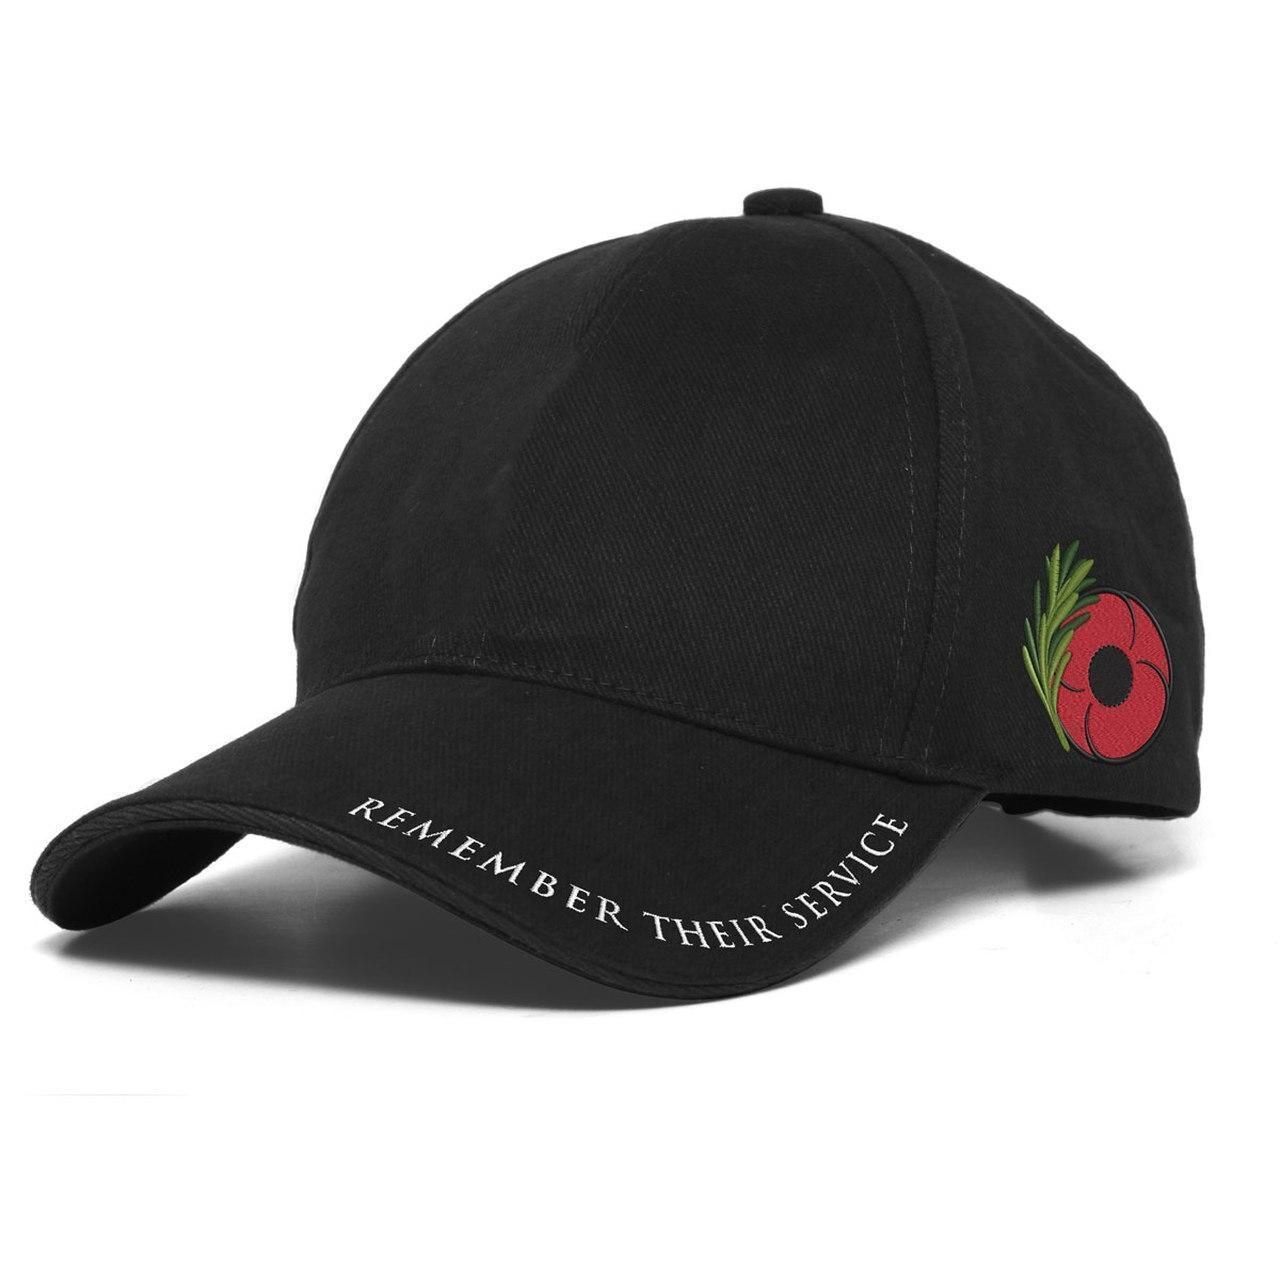 Remember Their Service Black Adjustable Hat Cap